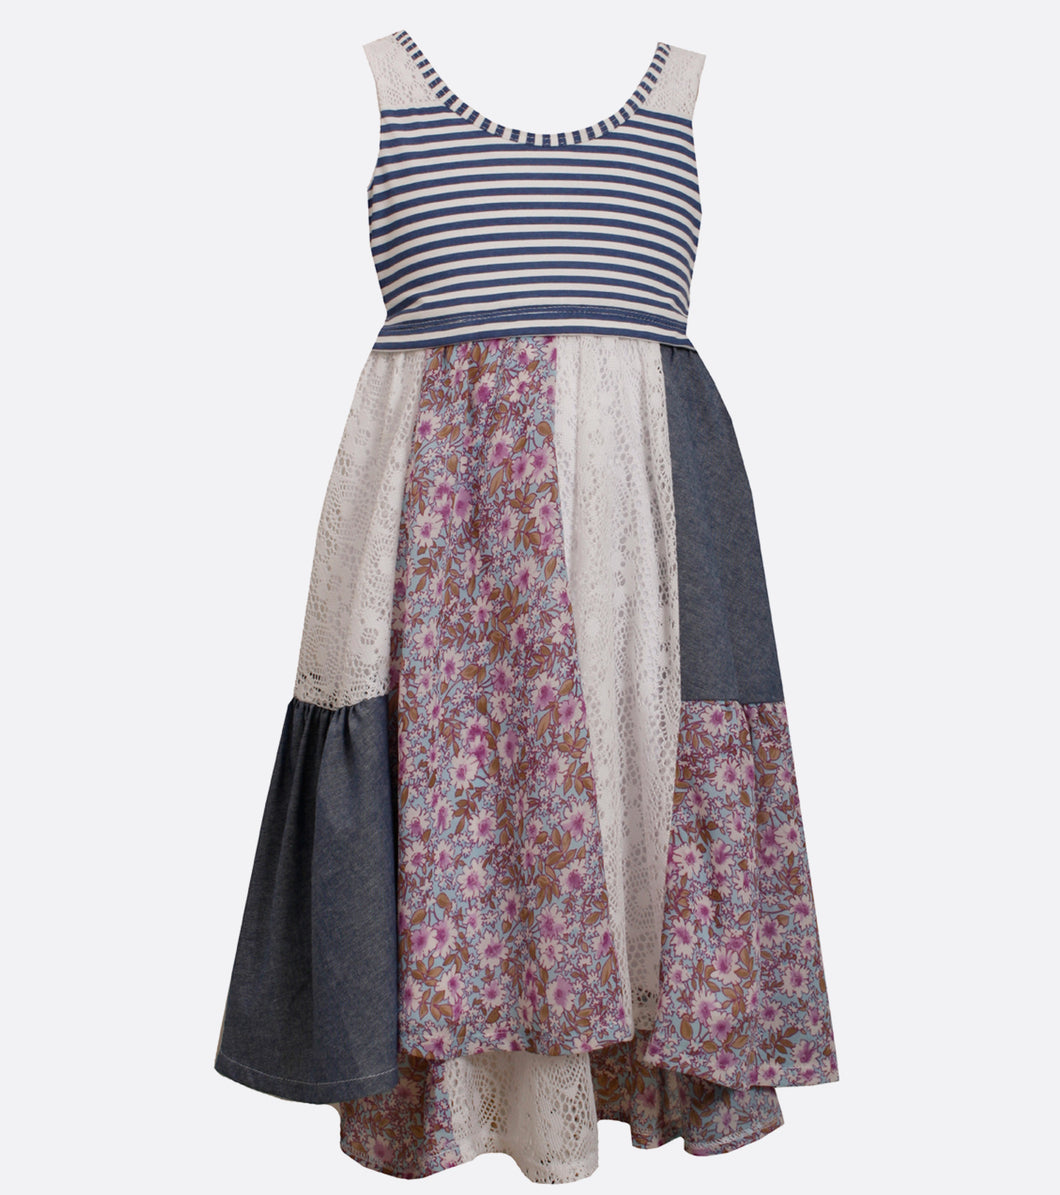 Bonnie Jean vintage inspired patchwork dress